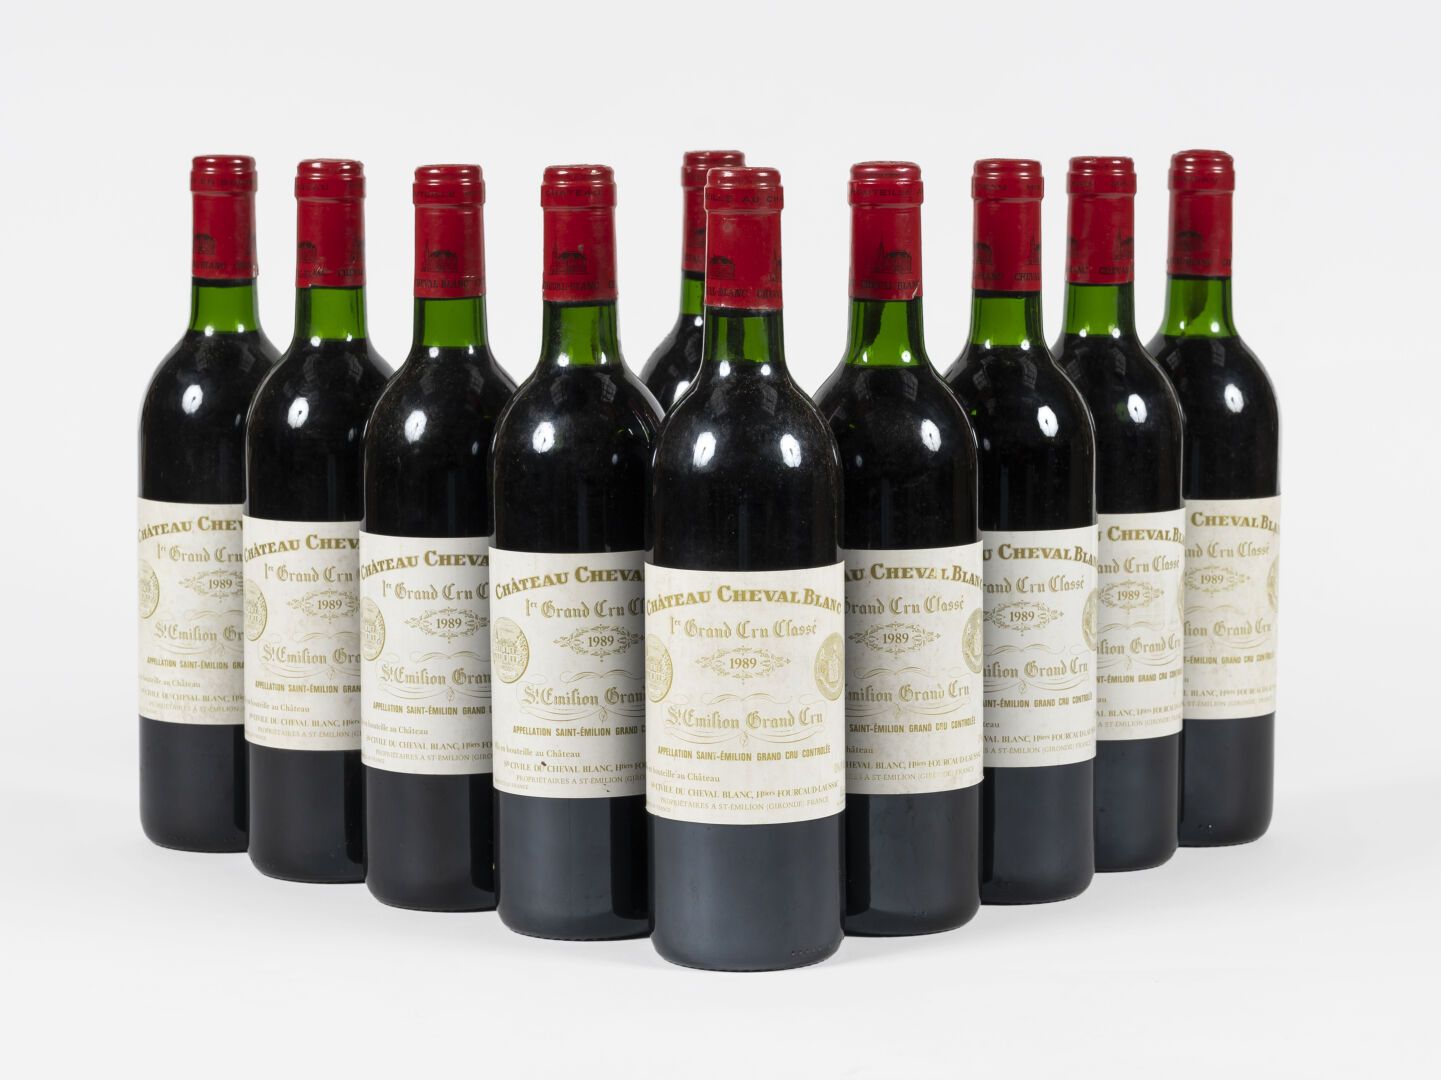 10 bouteilles Château Cheval Blanc 1989 10 bottiglie Château Cheval Blanc 1989
S&hellip;